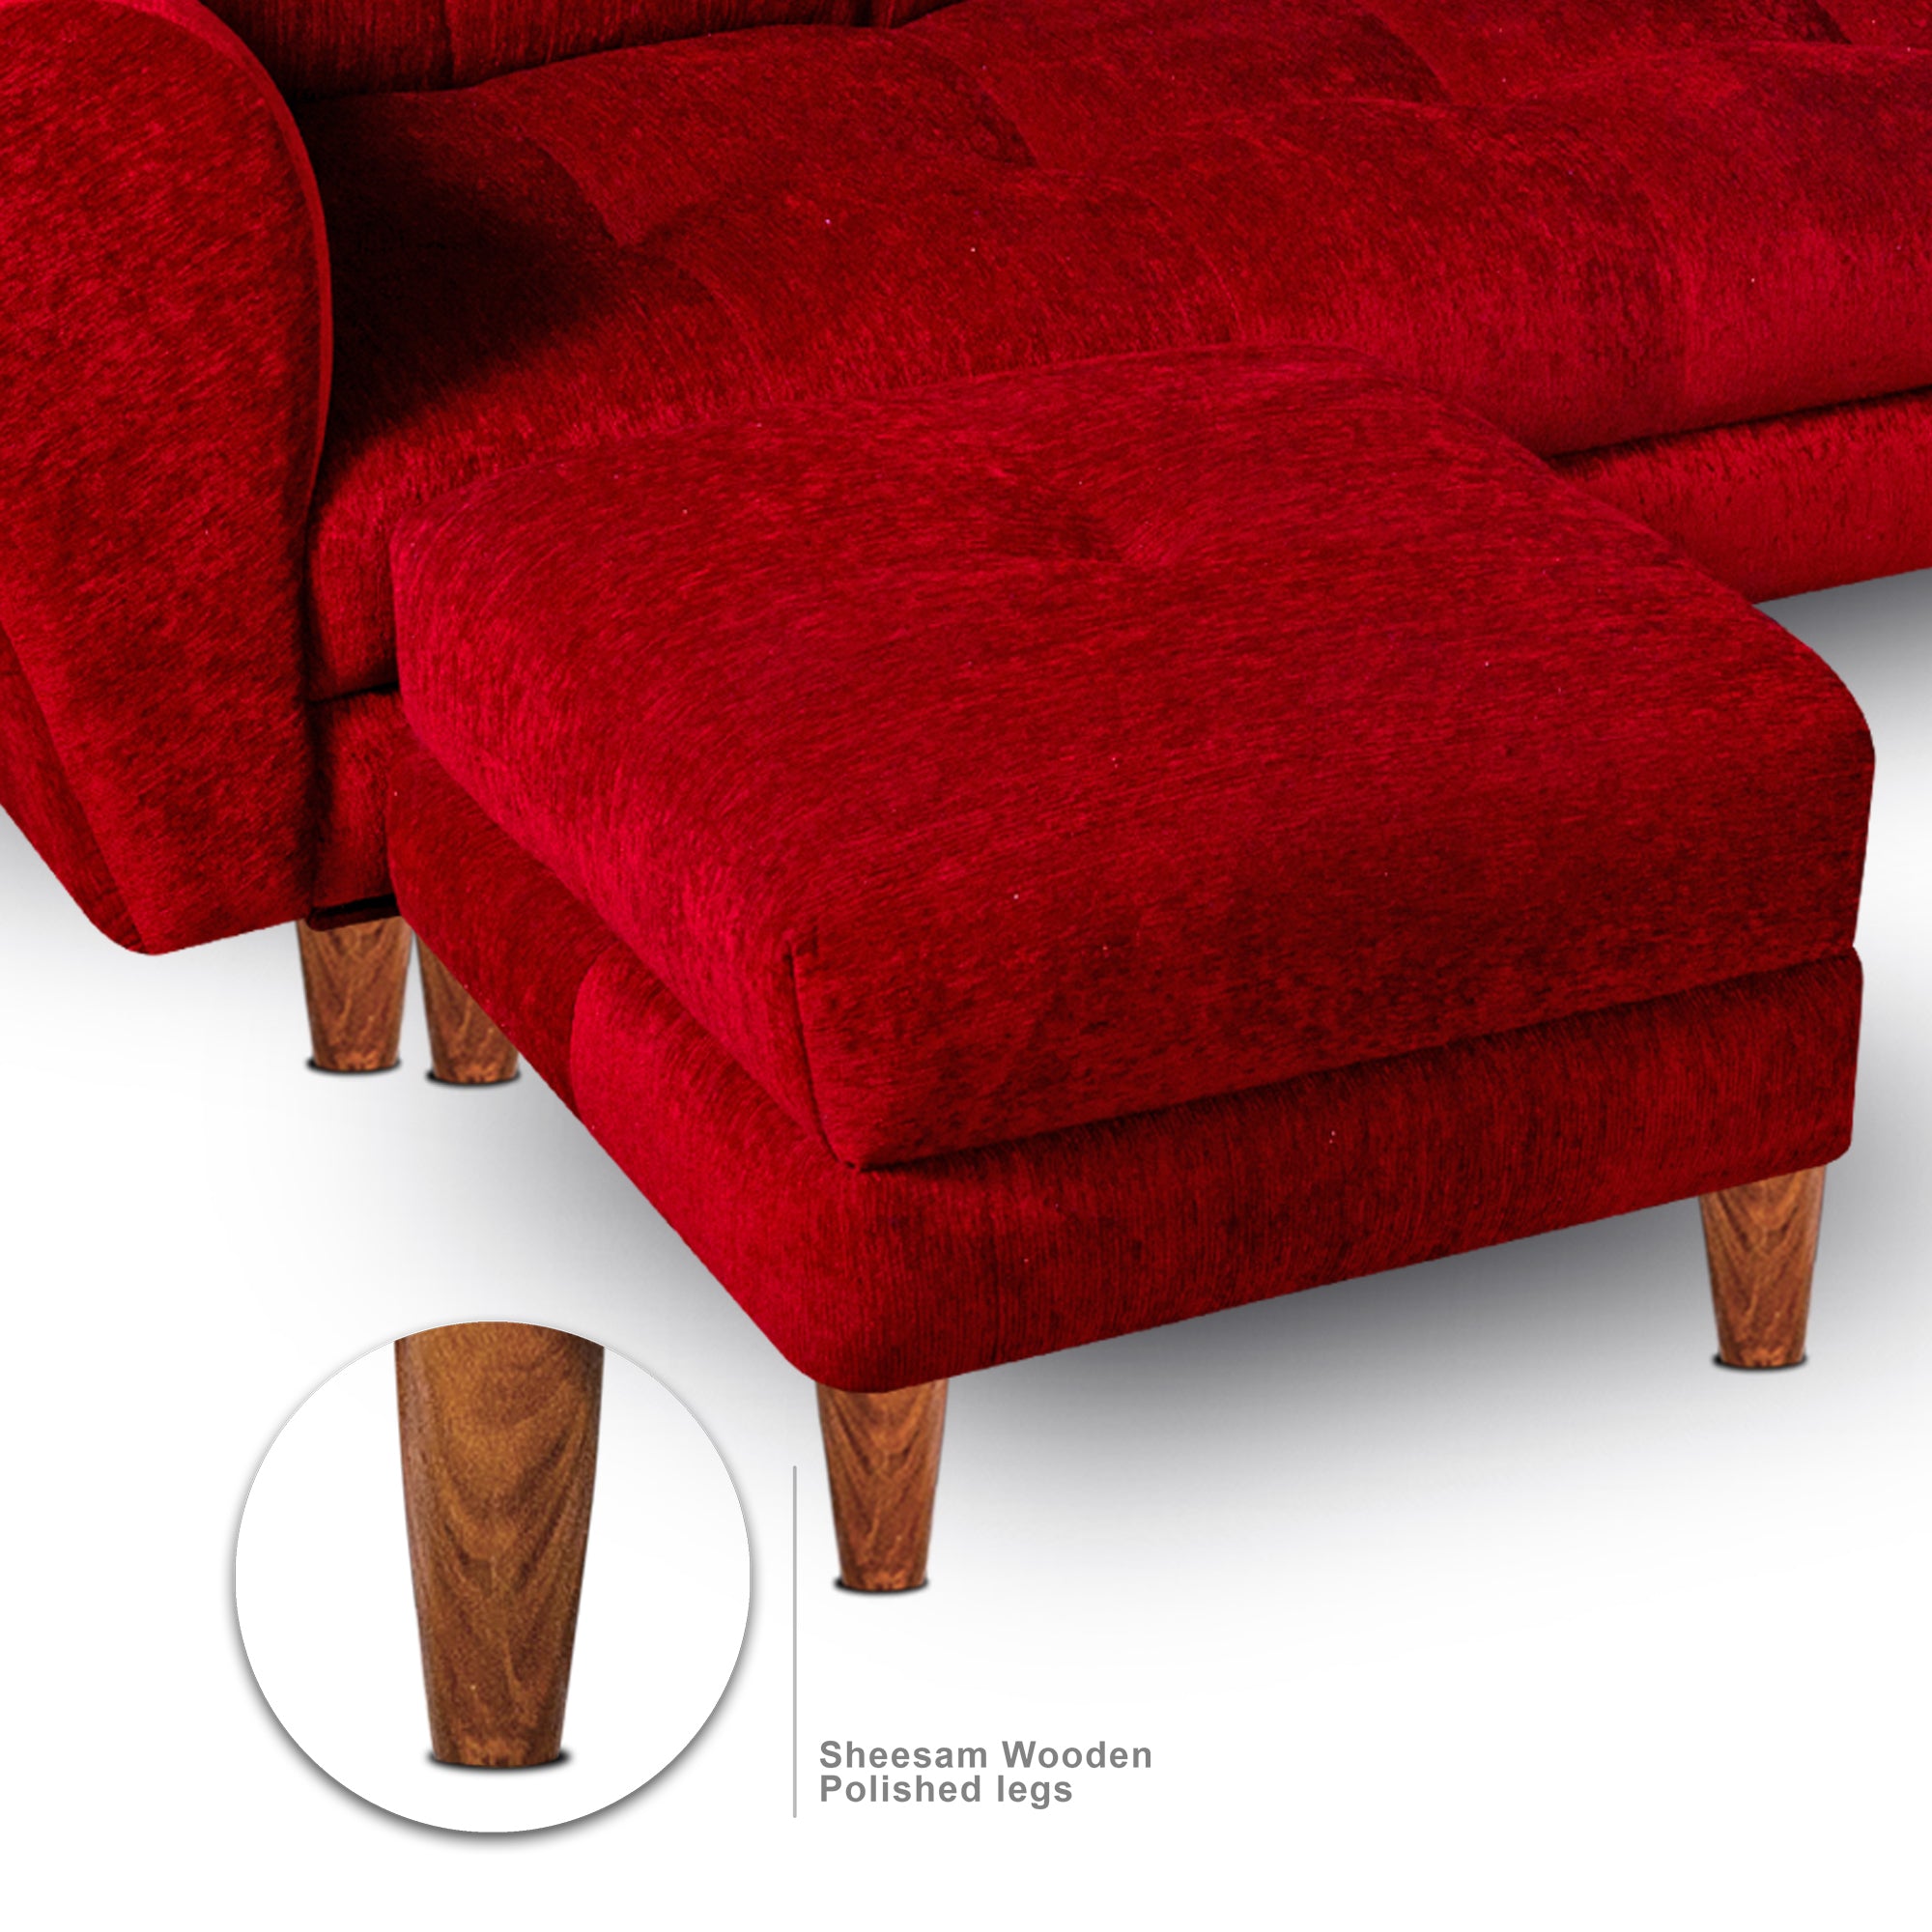 Seventh Heaven Milan 4 Seater Sofa with Ottoman, Chenille Molfino Fabric: 3 Year Warranty Fabric 4 Seater Sofa  (Finish Color - Maroon, DIY(Do-It-Yourself))